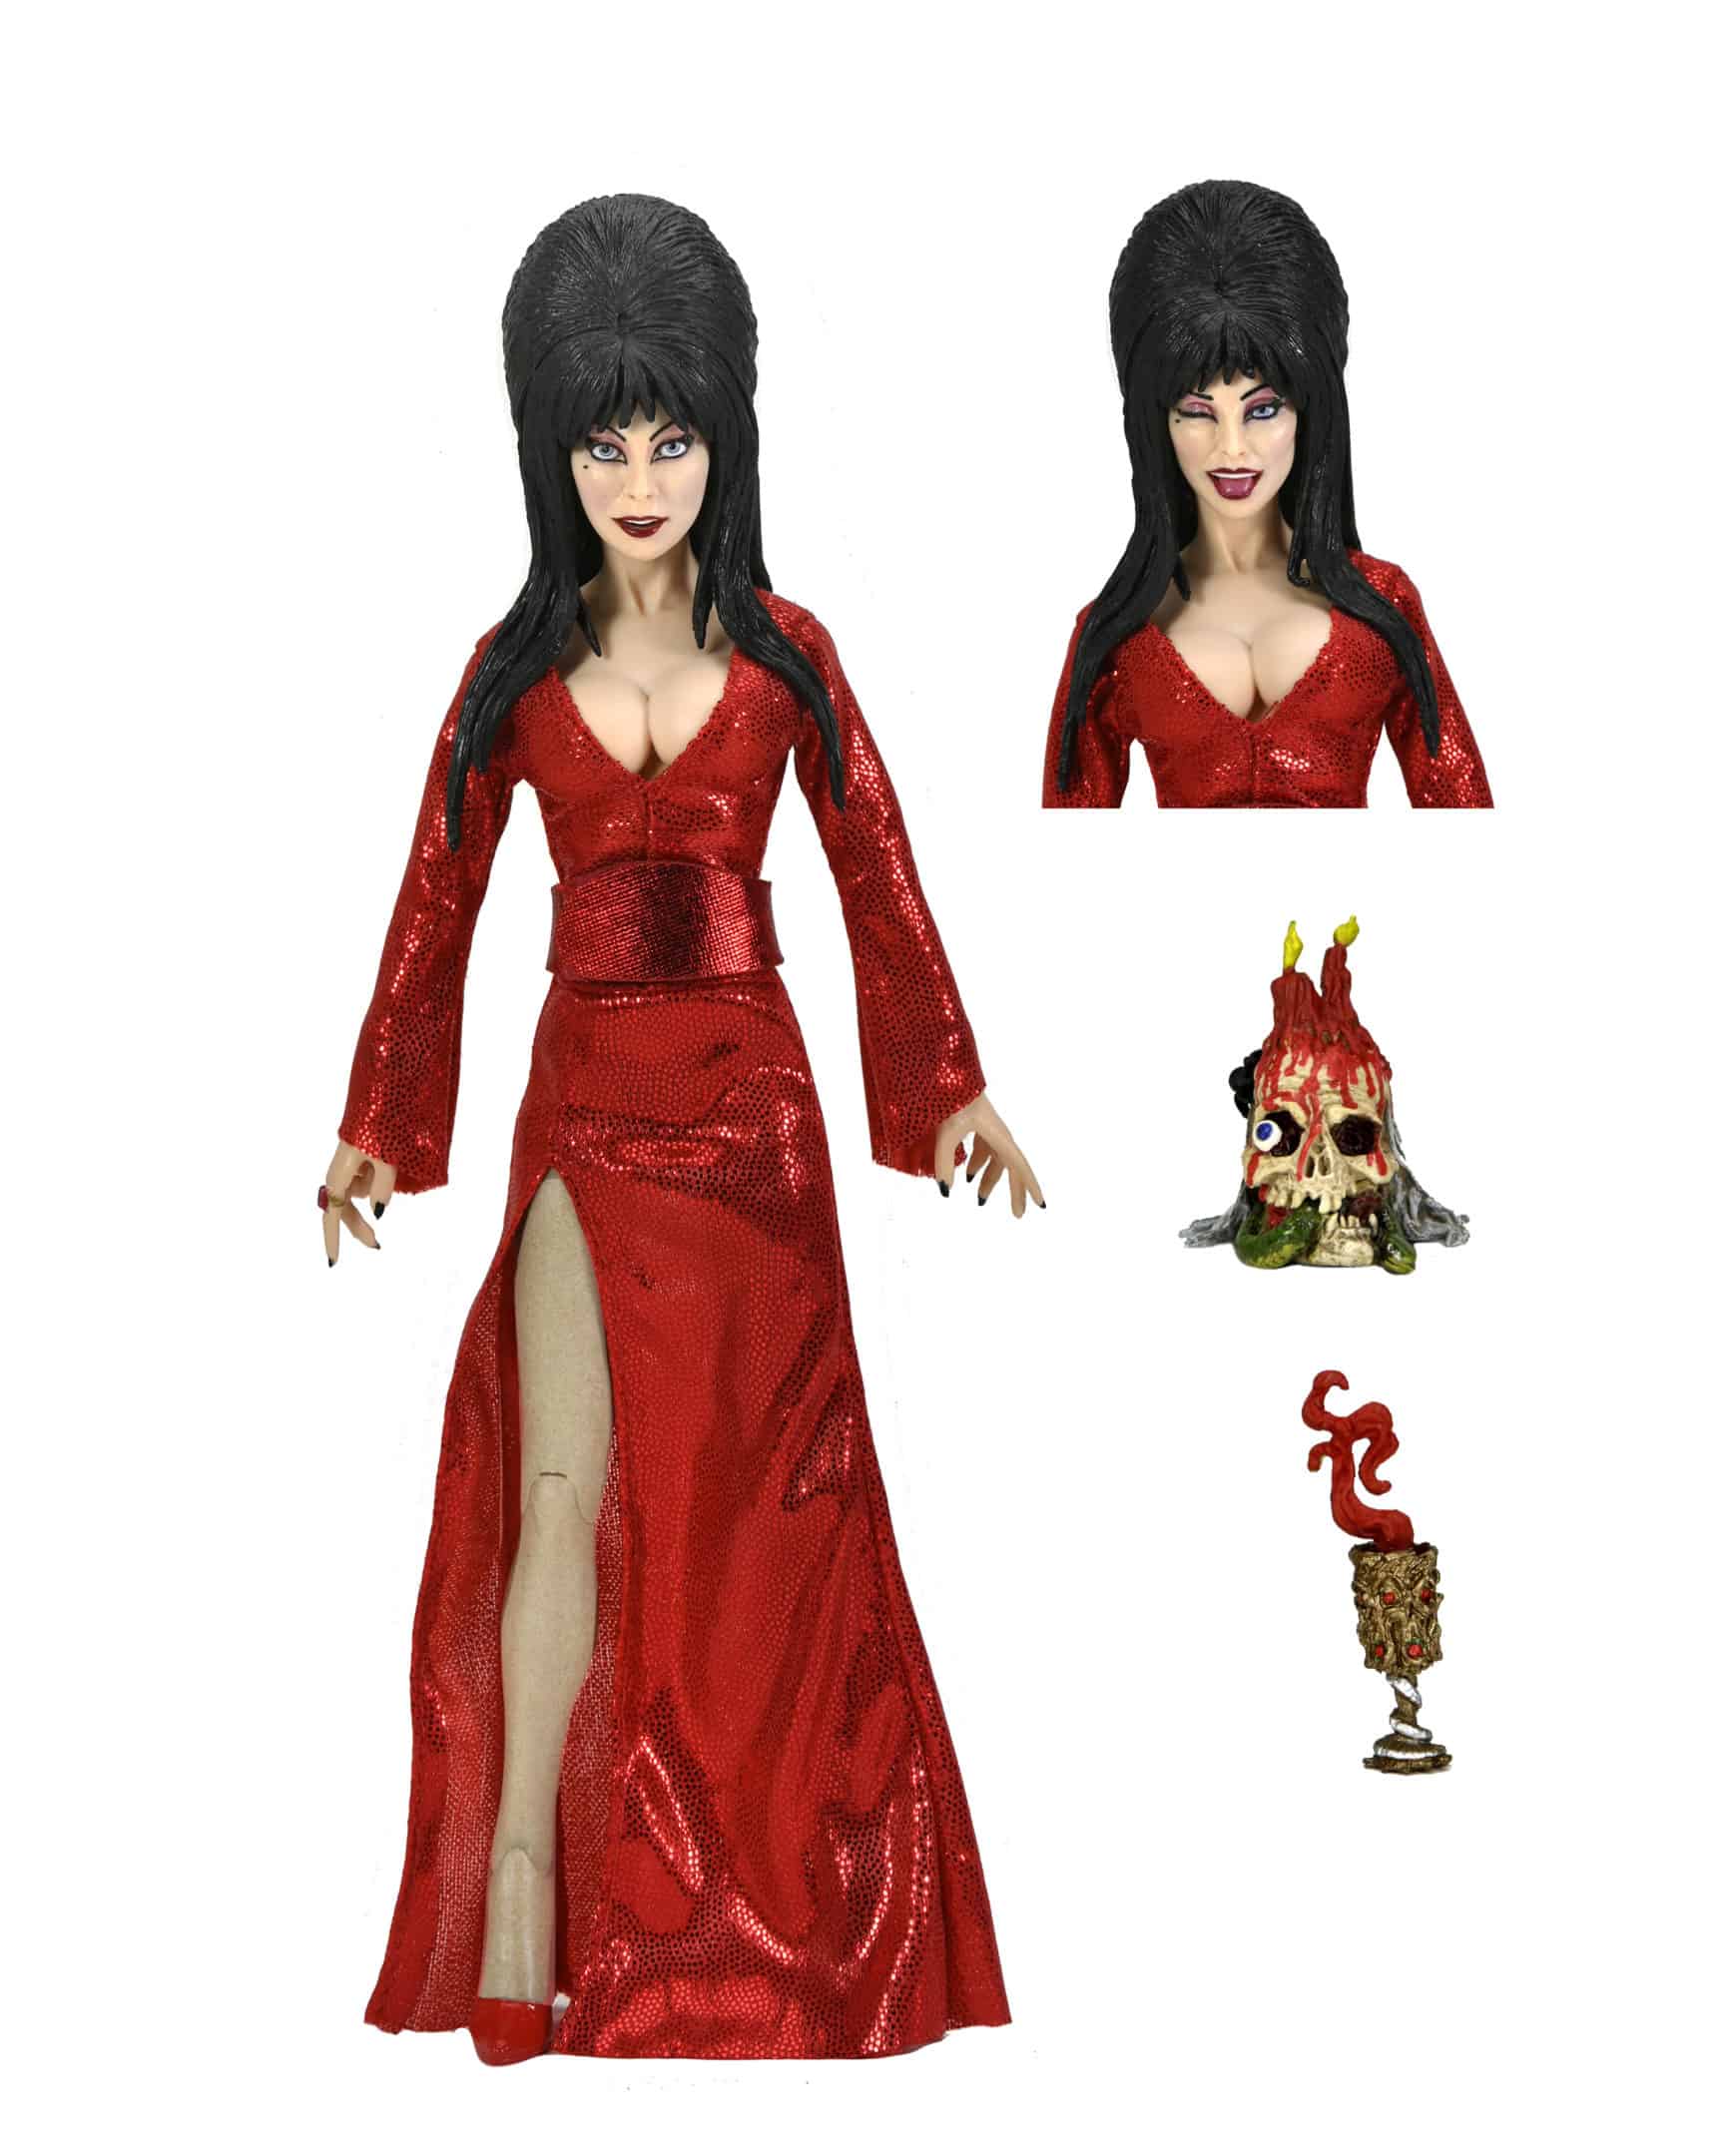 NECA unveils some brand-new Elvira figures! 1